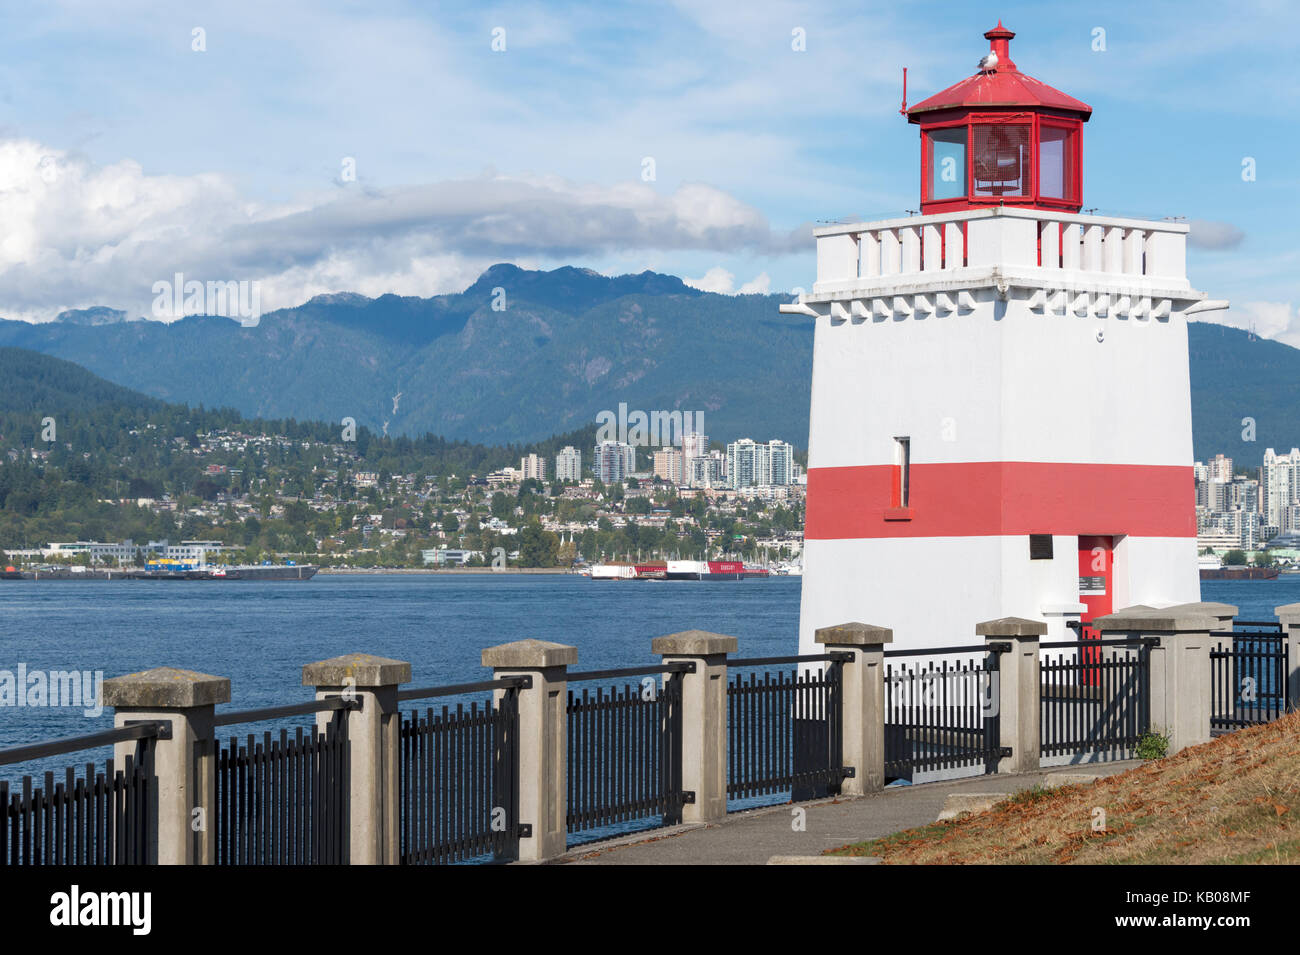 Vancouver, British Columbia, Canadá - 12 de septiembre de 2017: Brockton Point Lighthouse en el parque Stanley. Foto de stock